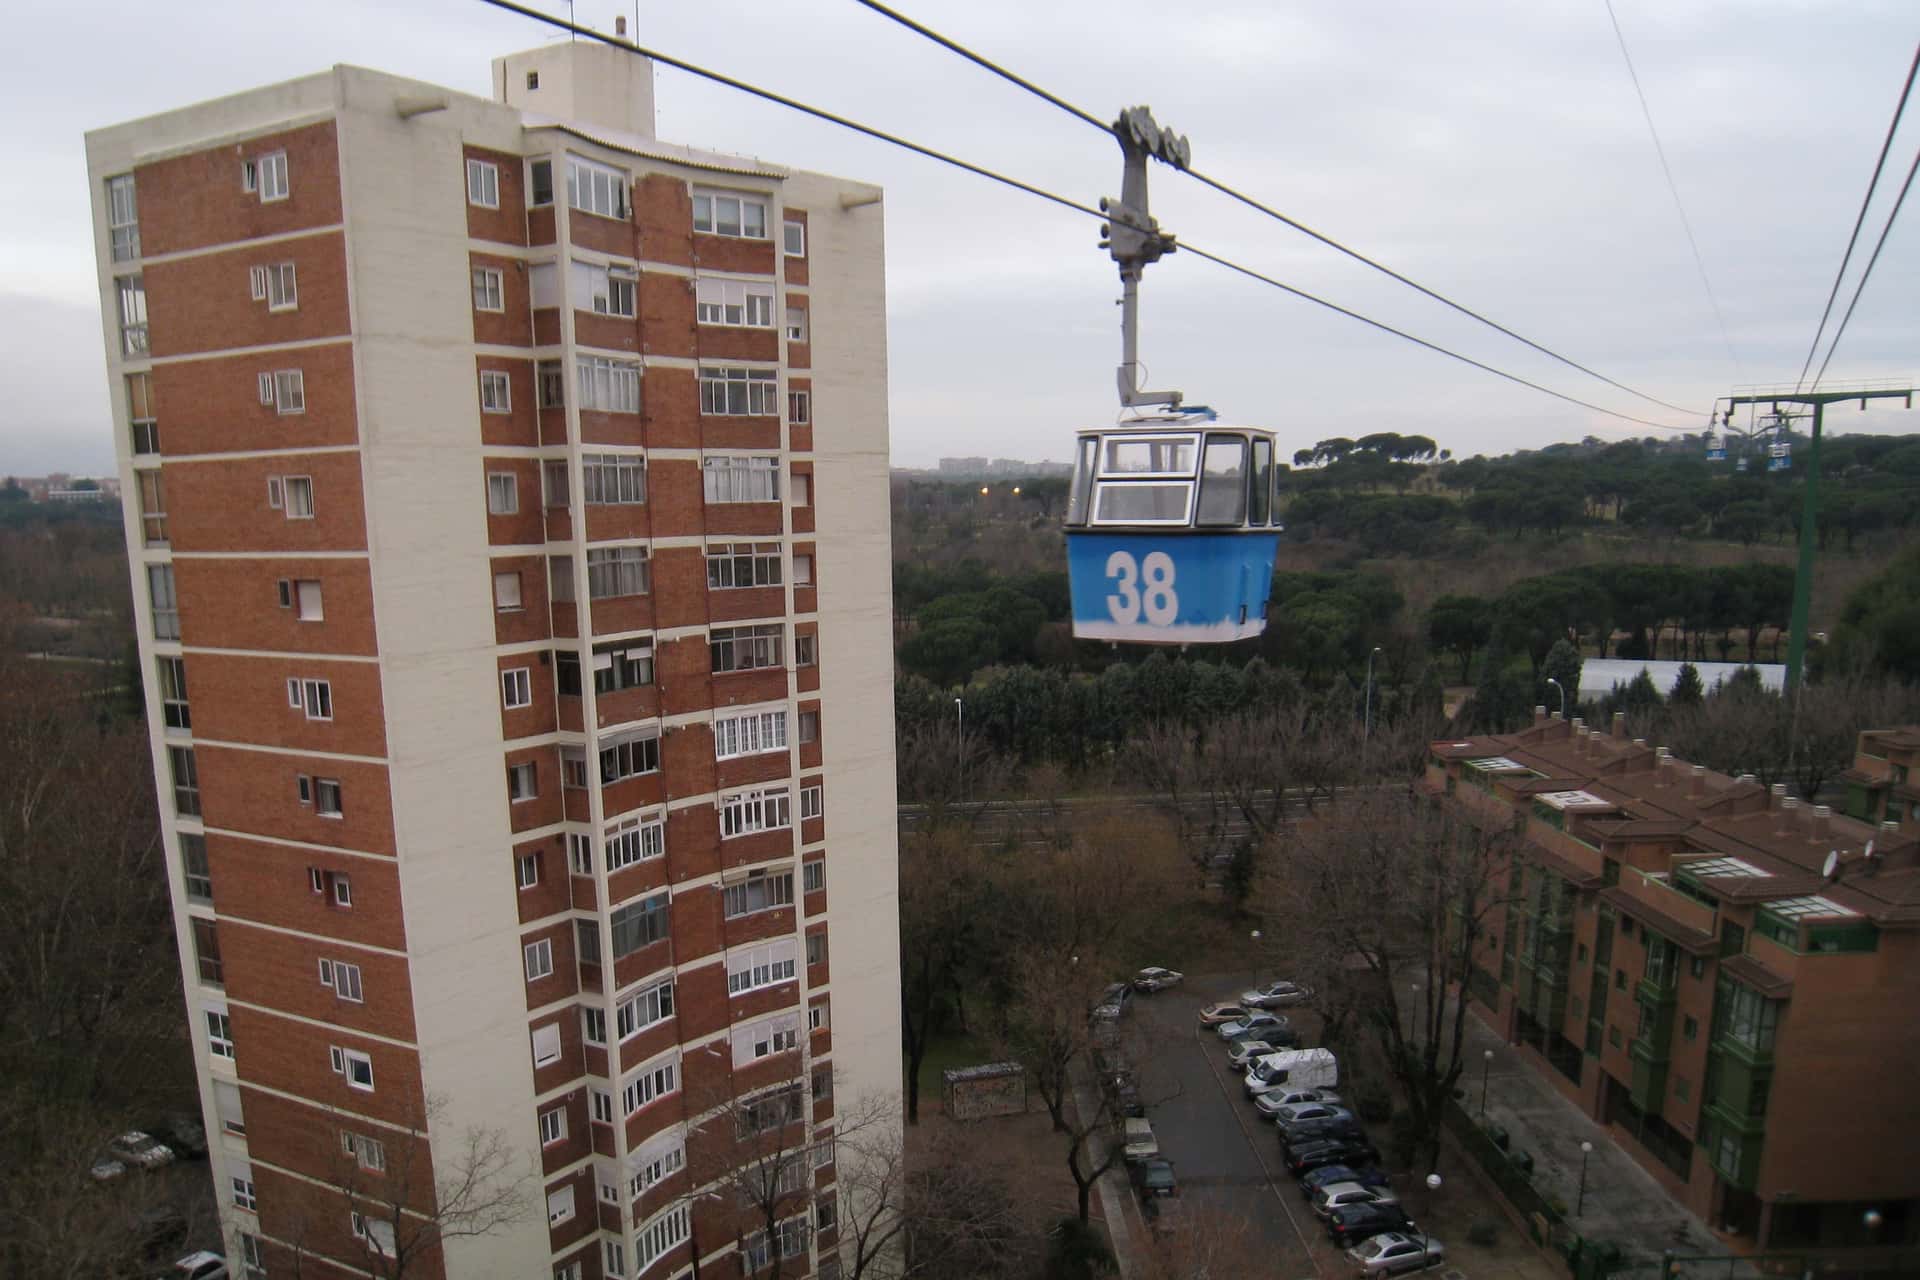 Teleférico de Madrid passing by high-rise apartments